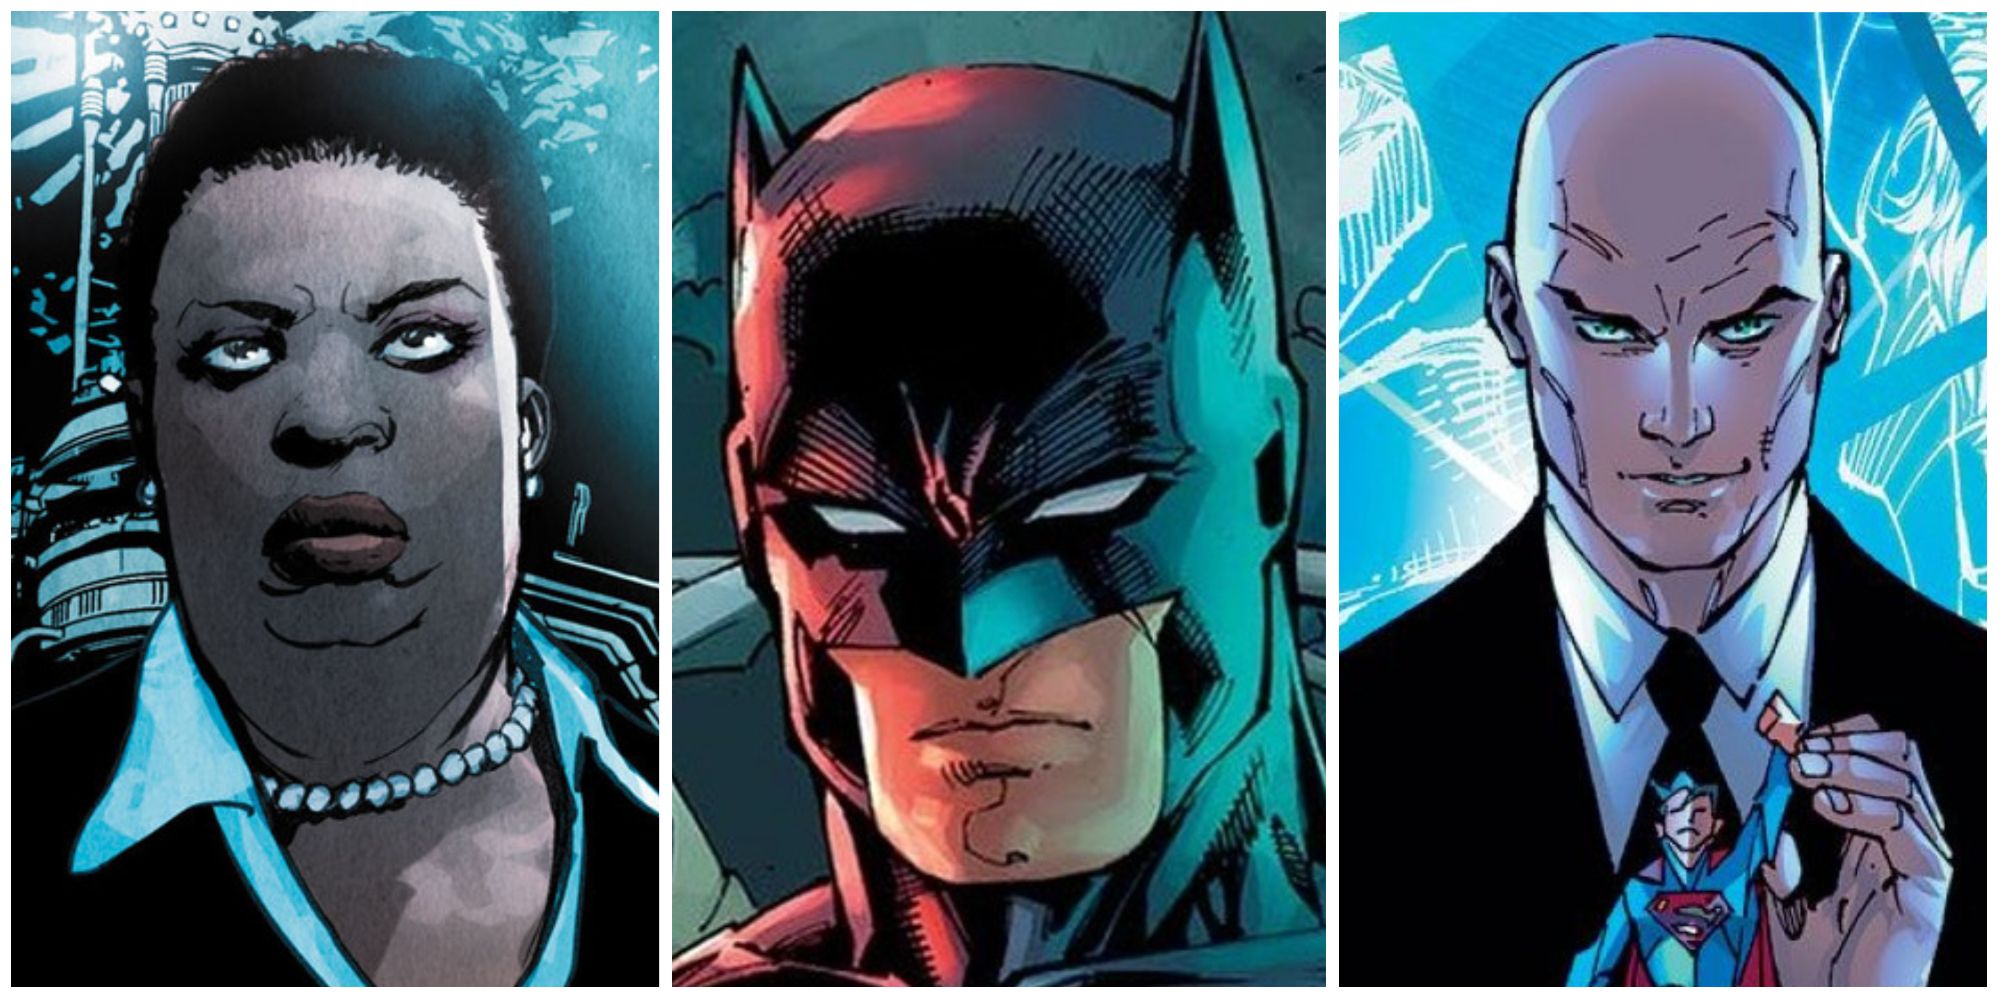 split image of Amanda Waller Batman and Lex Luthor from DC Comics